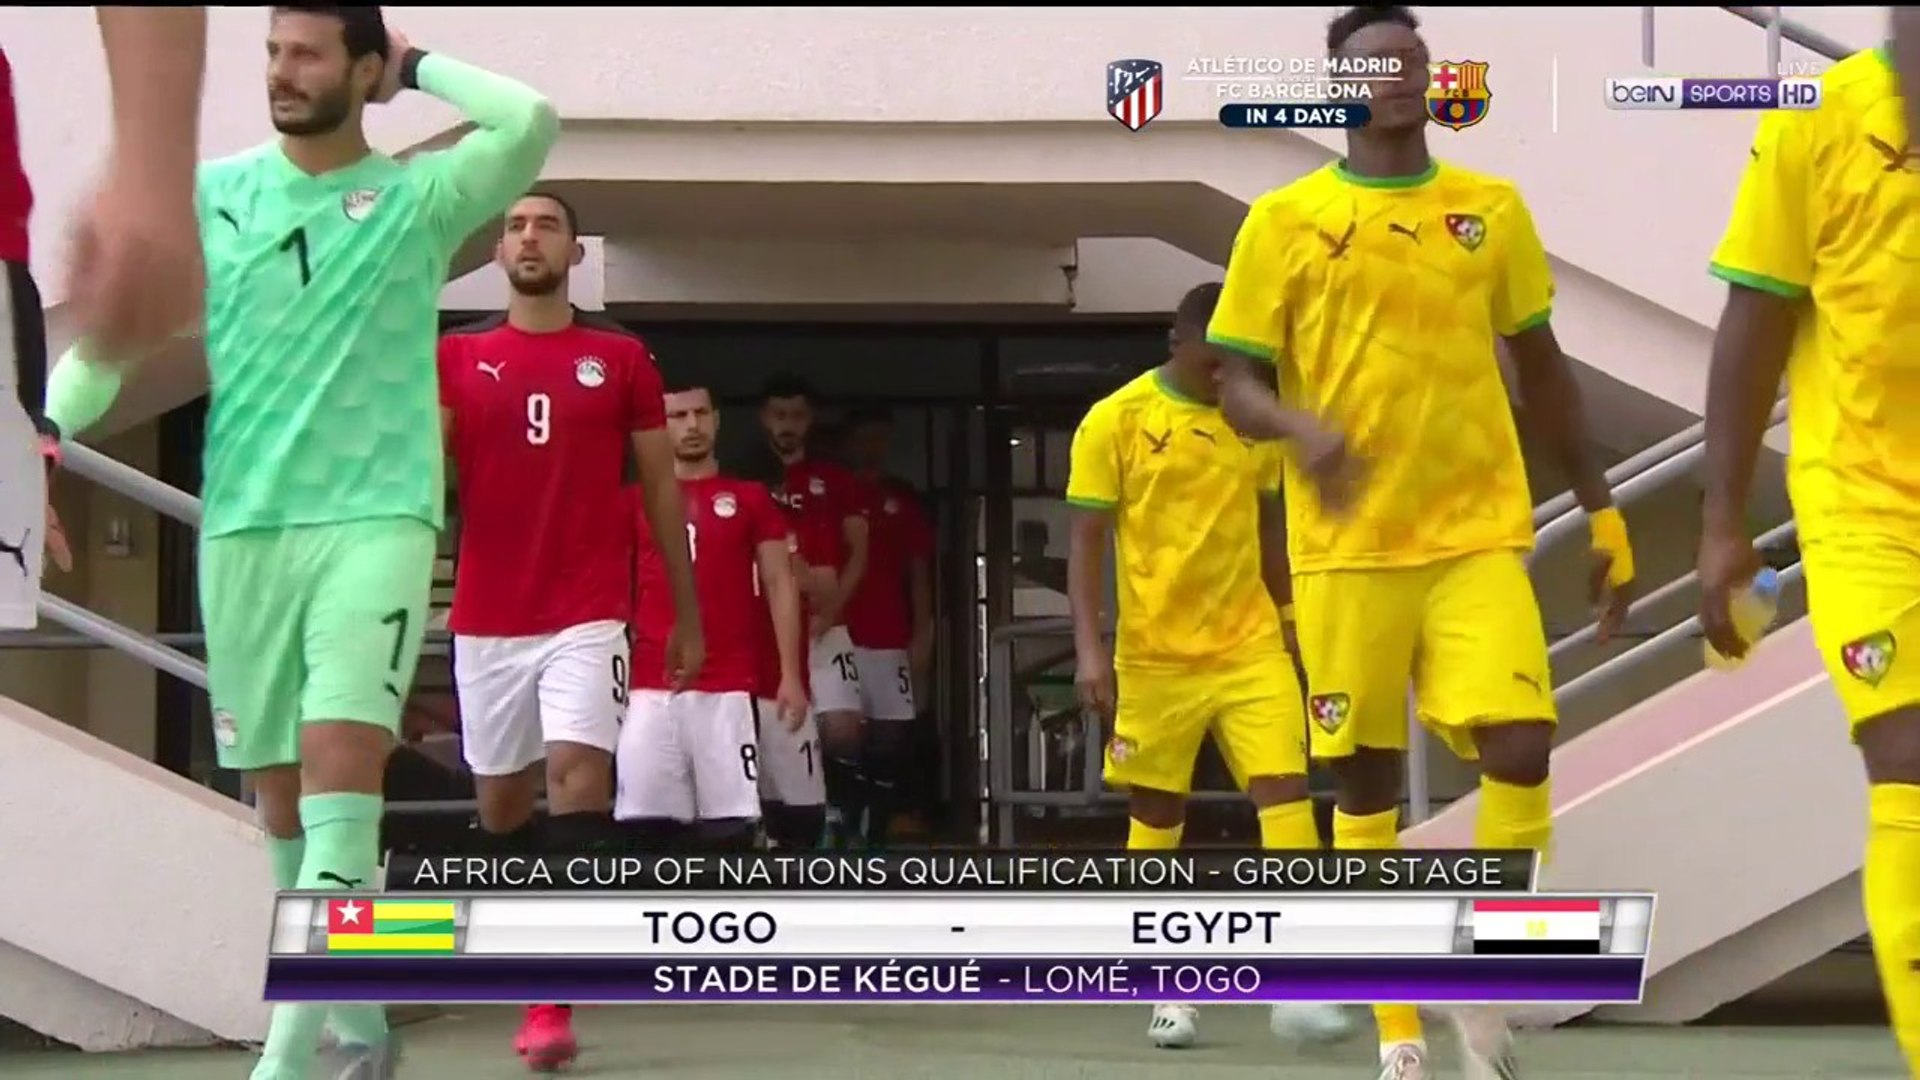 Togo vs Egypt - Watch LIVE on beIN SPORTS